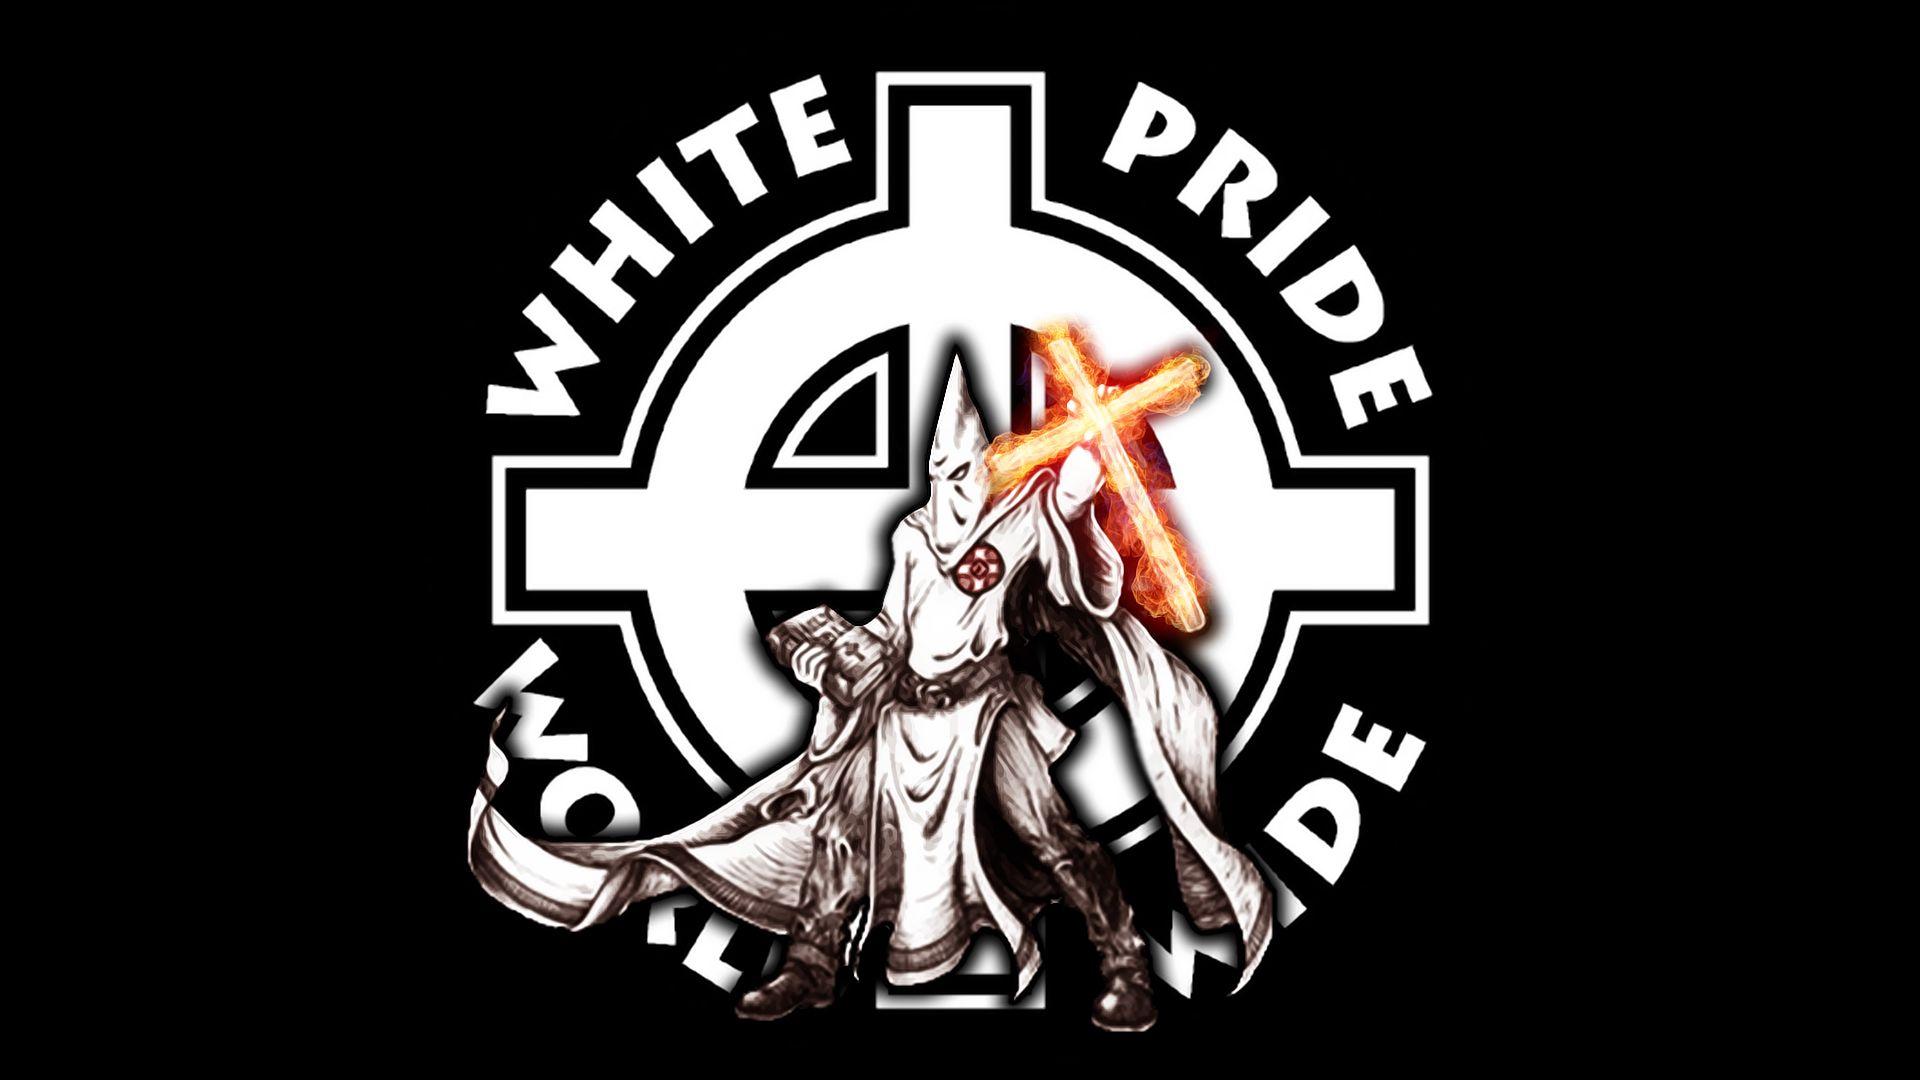 Any Ku Klux Klan Graphics?